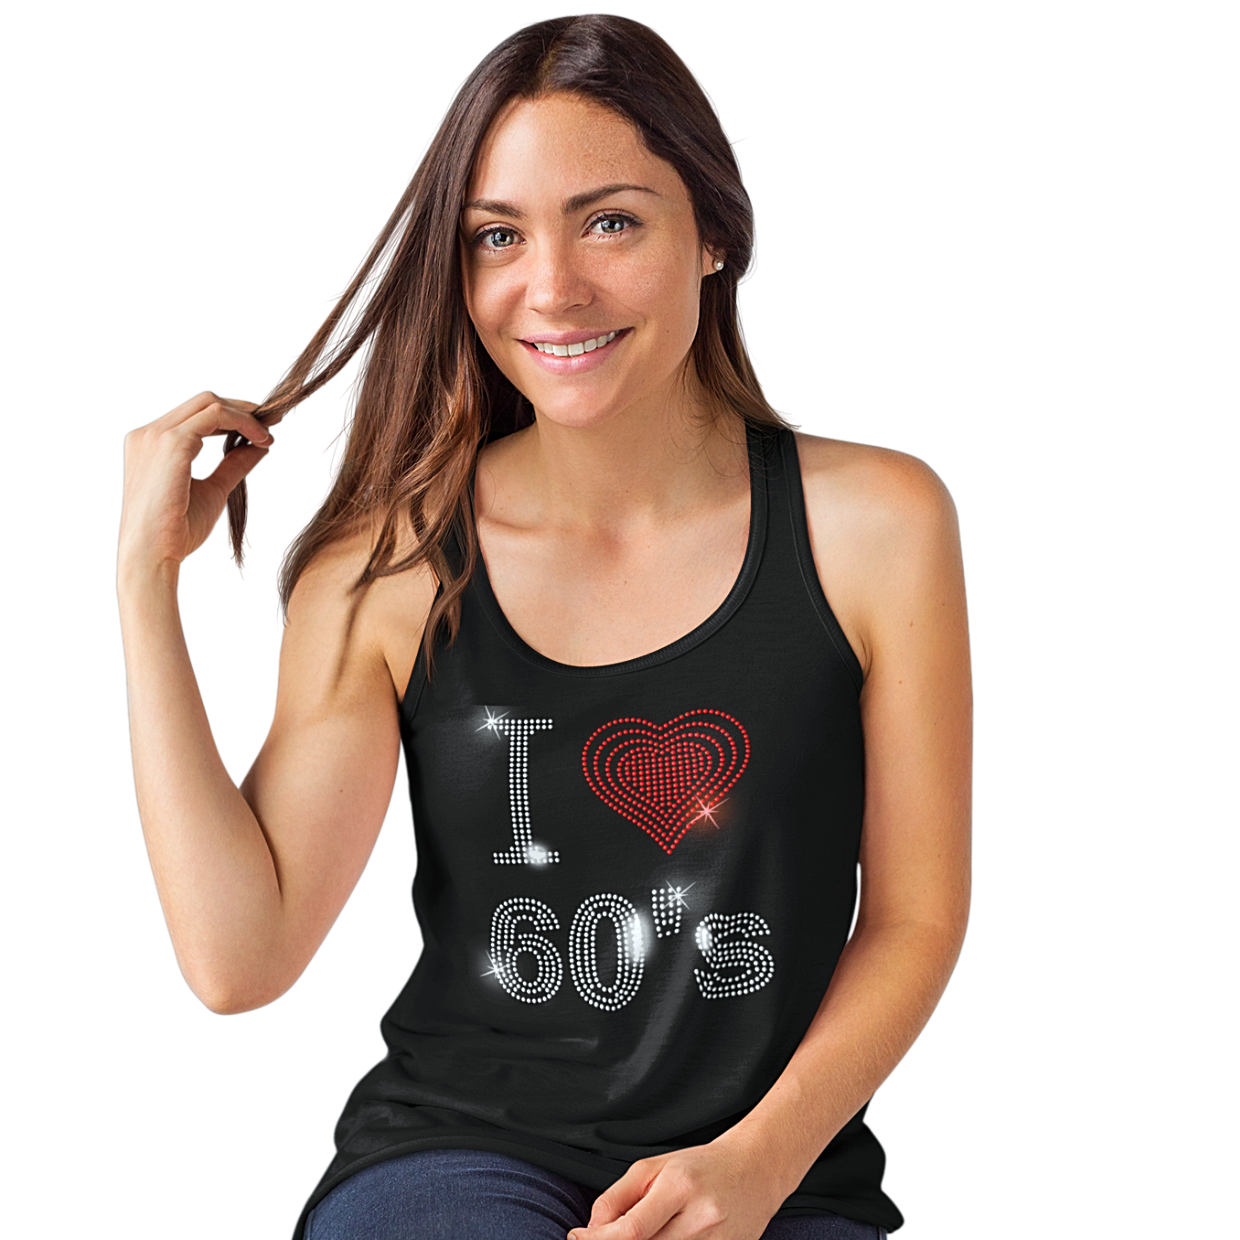 I Love Sixties 60s Rhinestud Design T-Shirts or Vests - Crystal Design 4 U